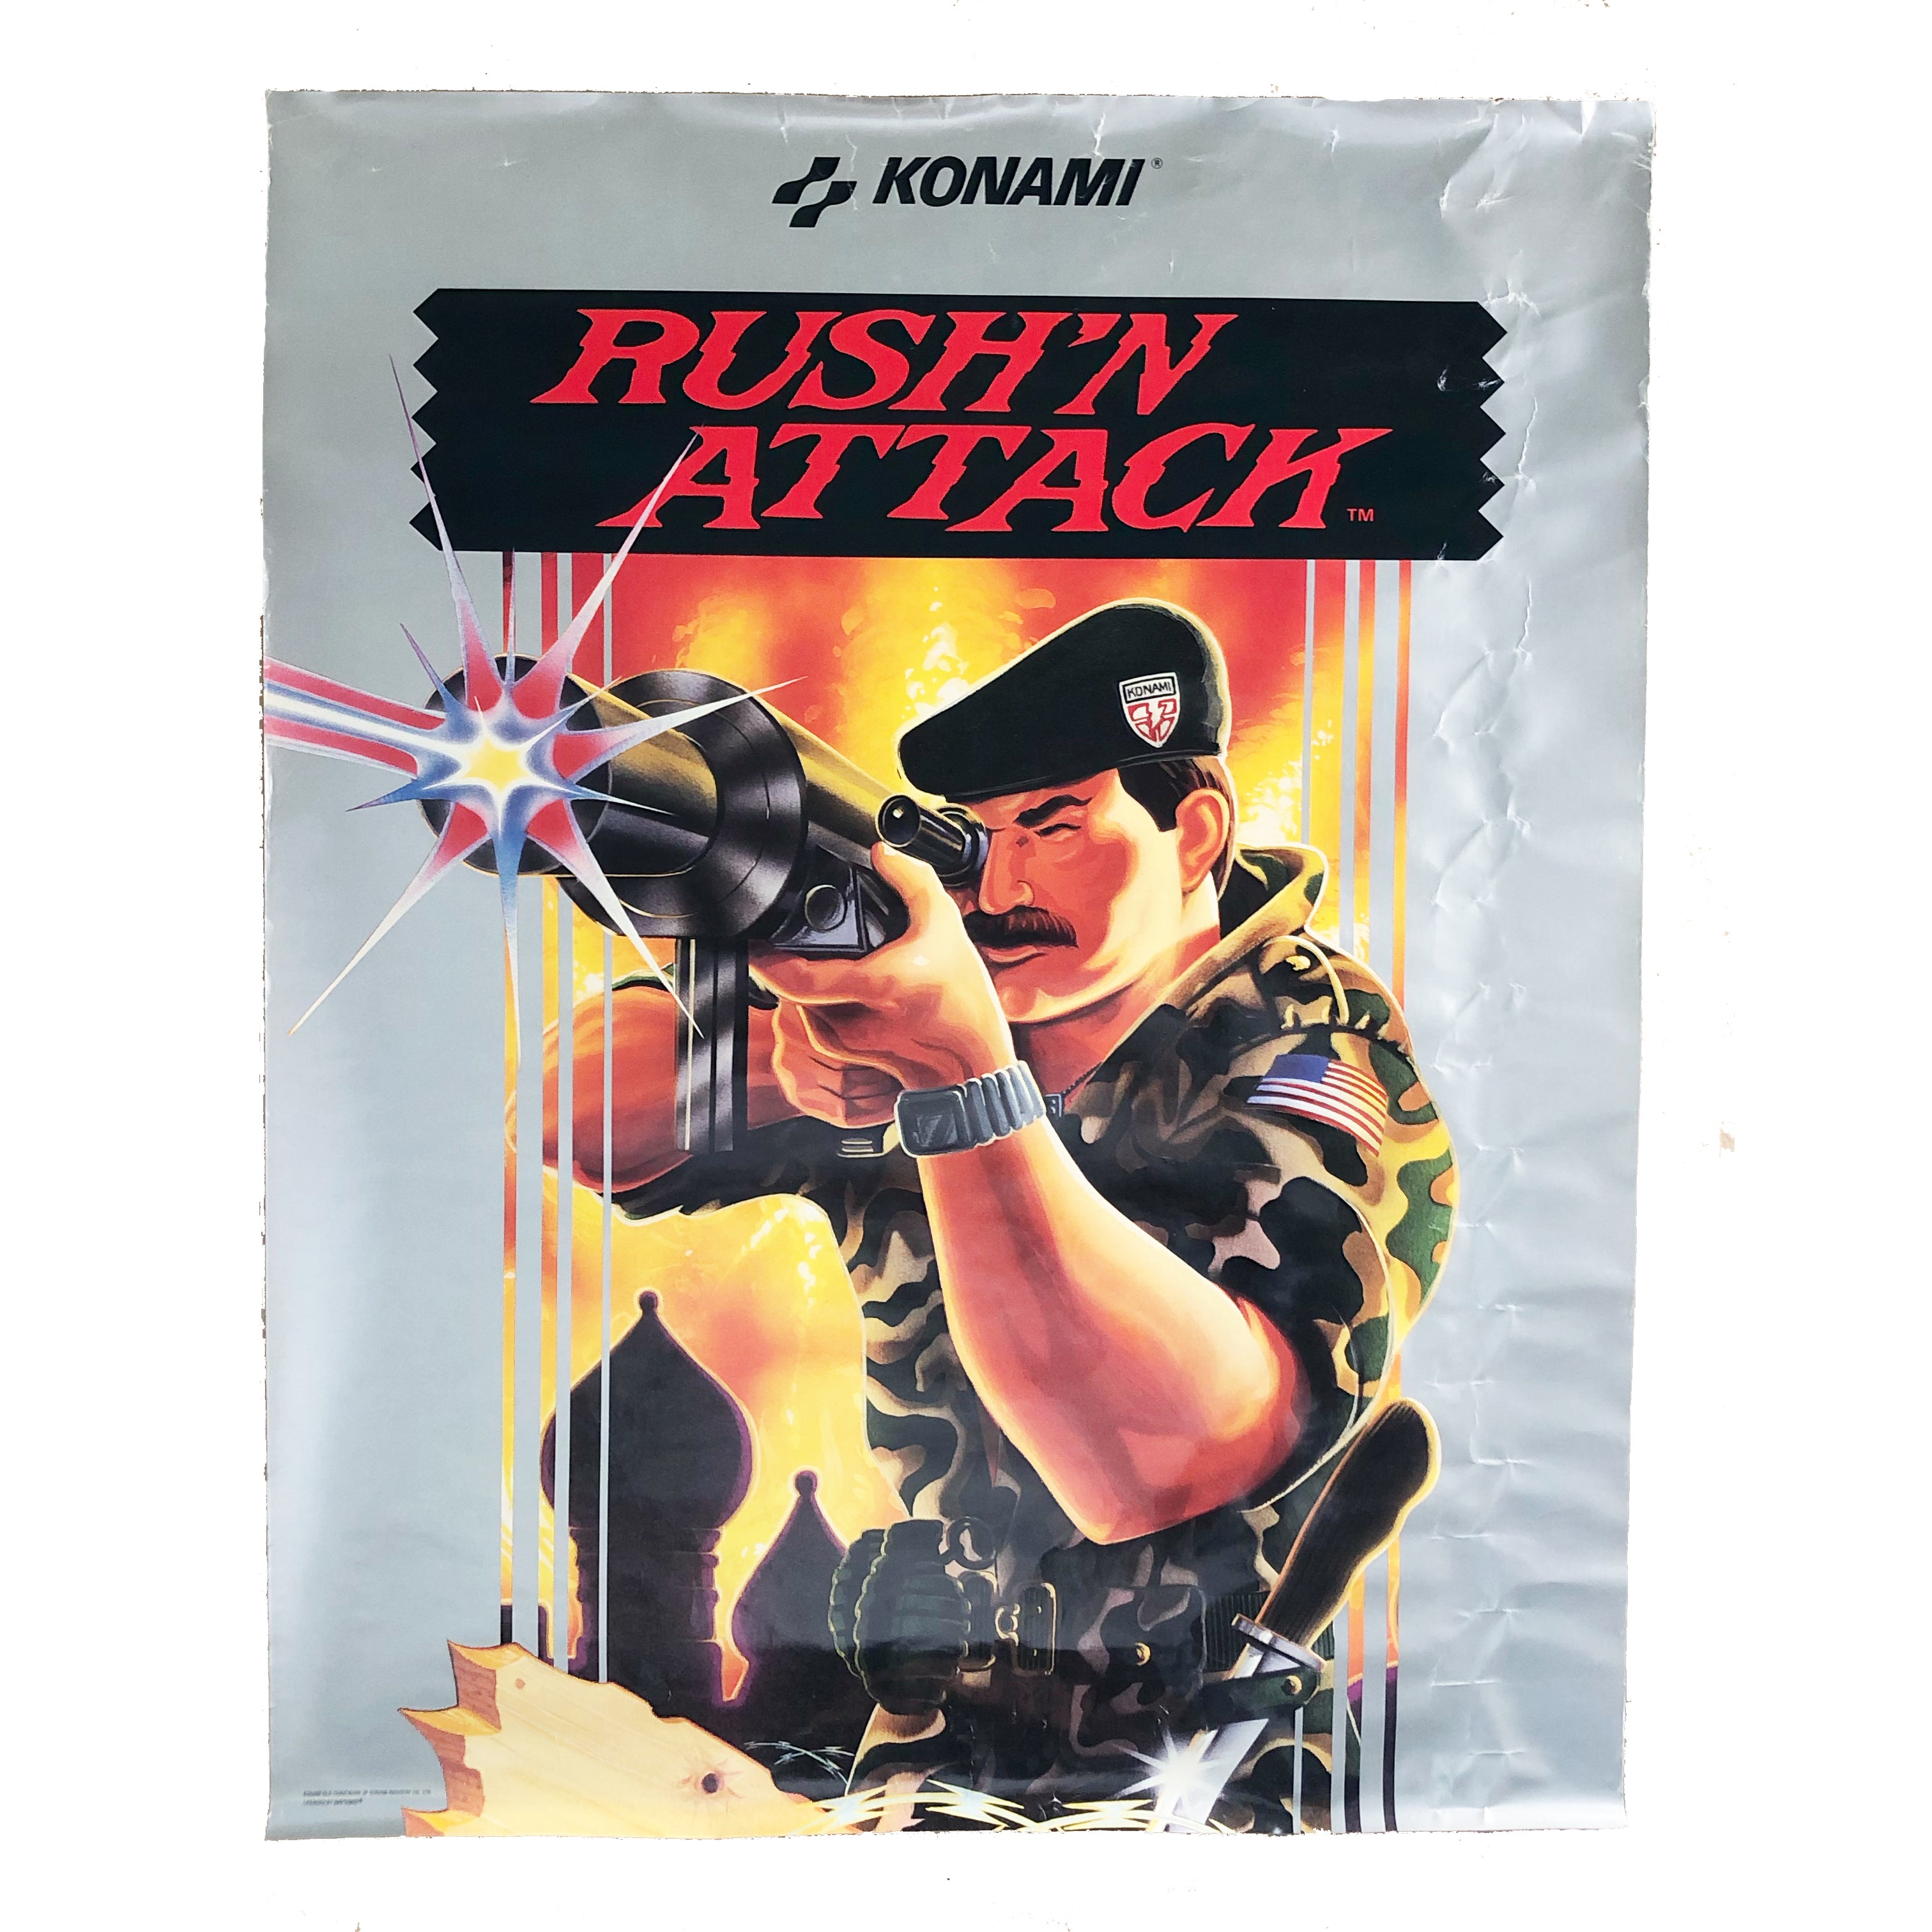 Rush N' Attack